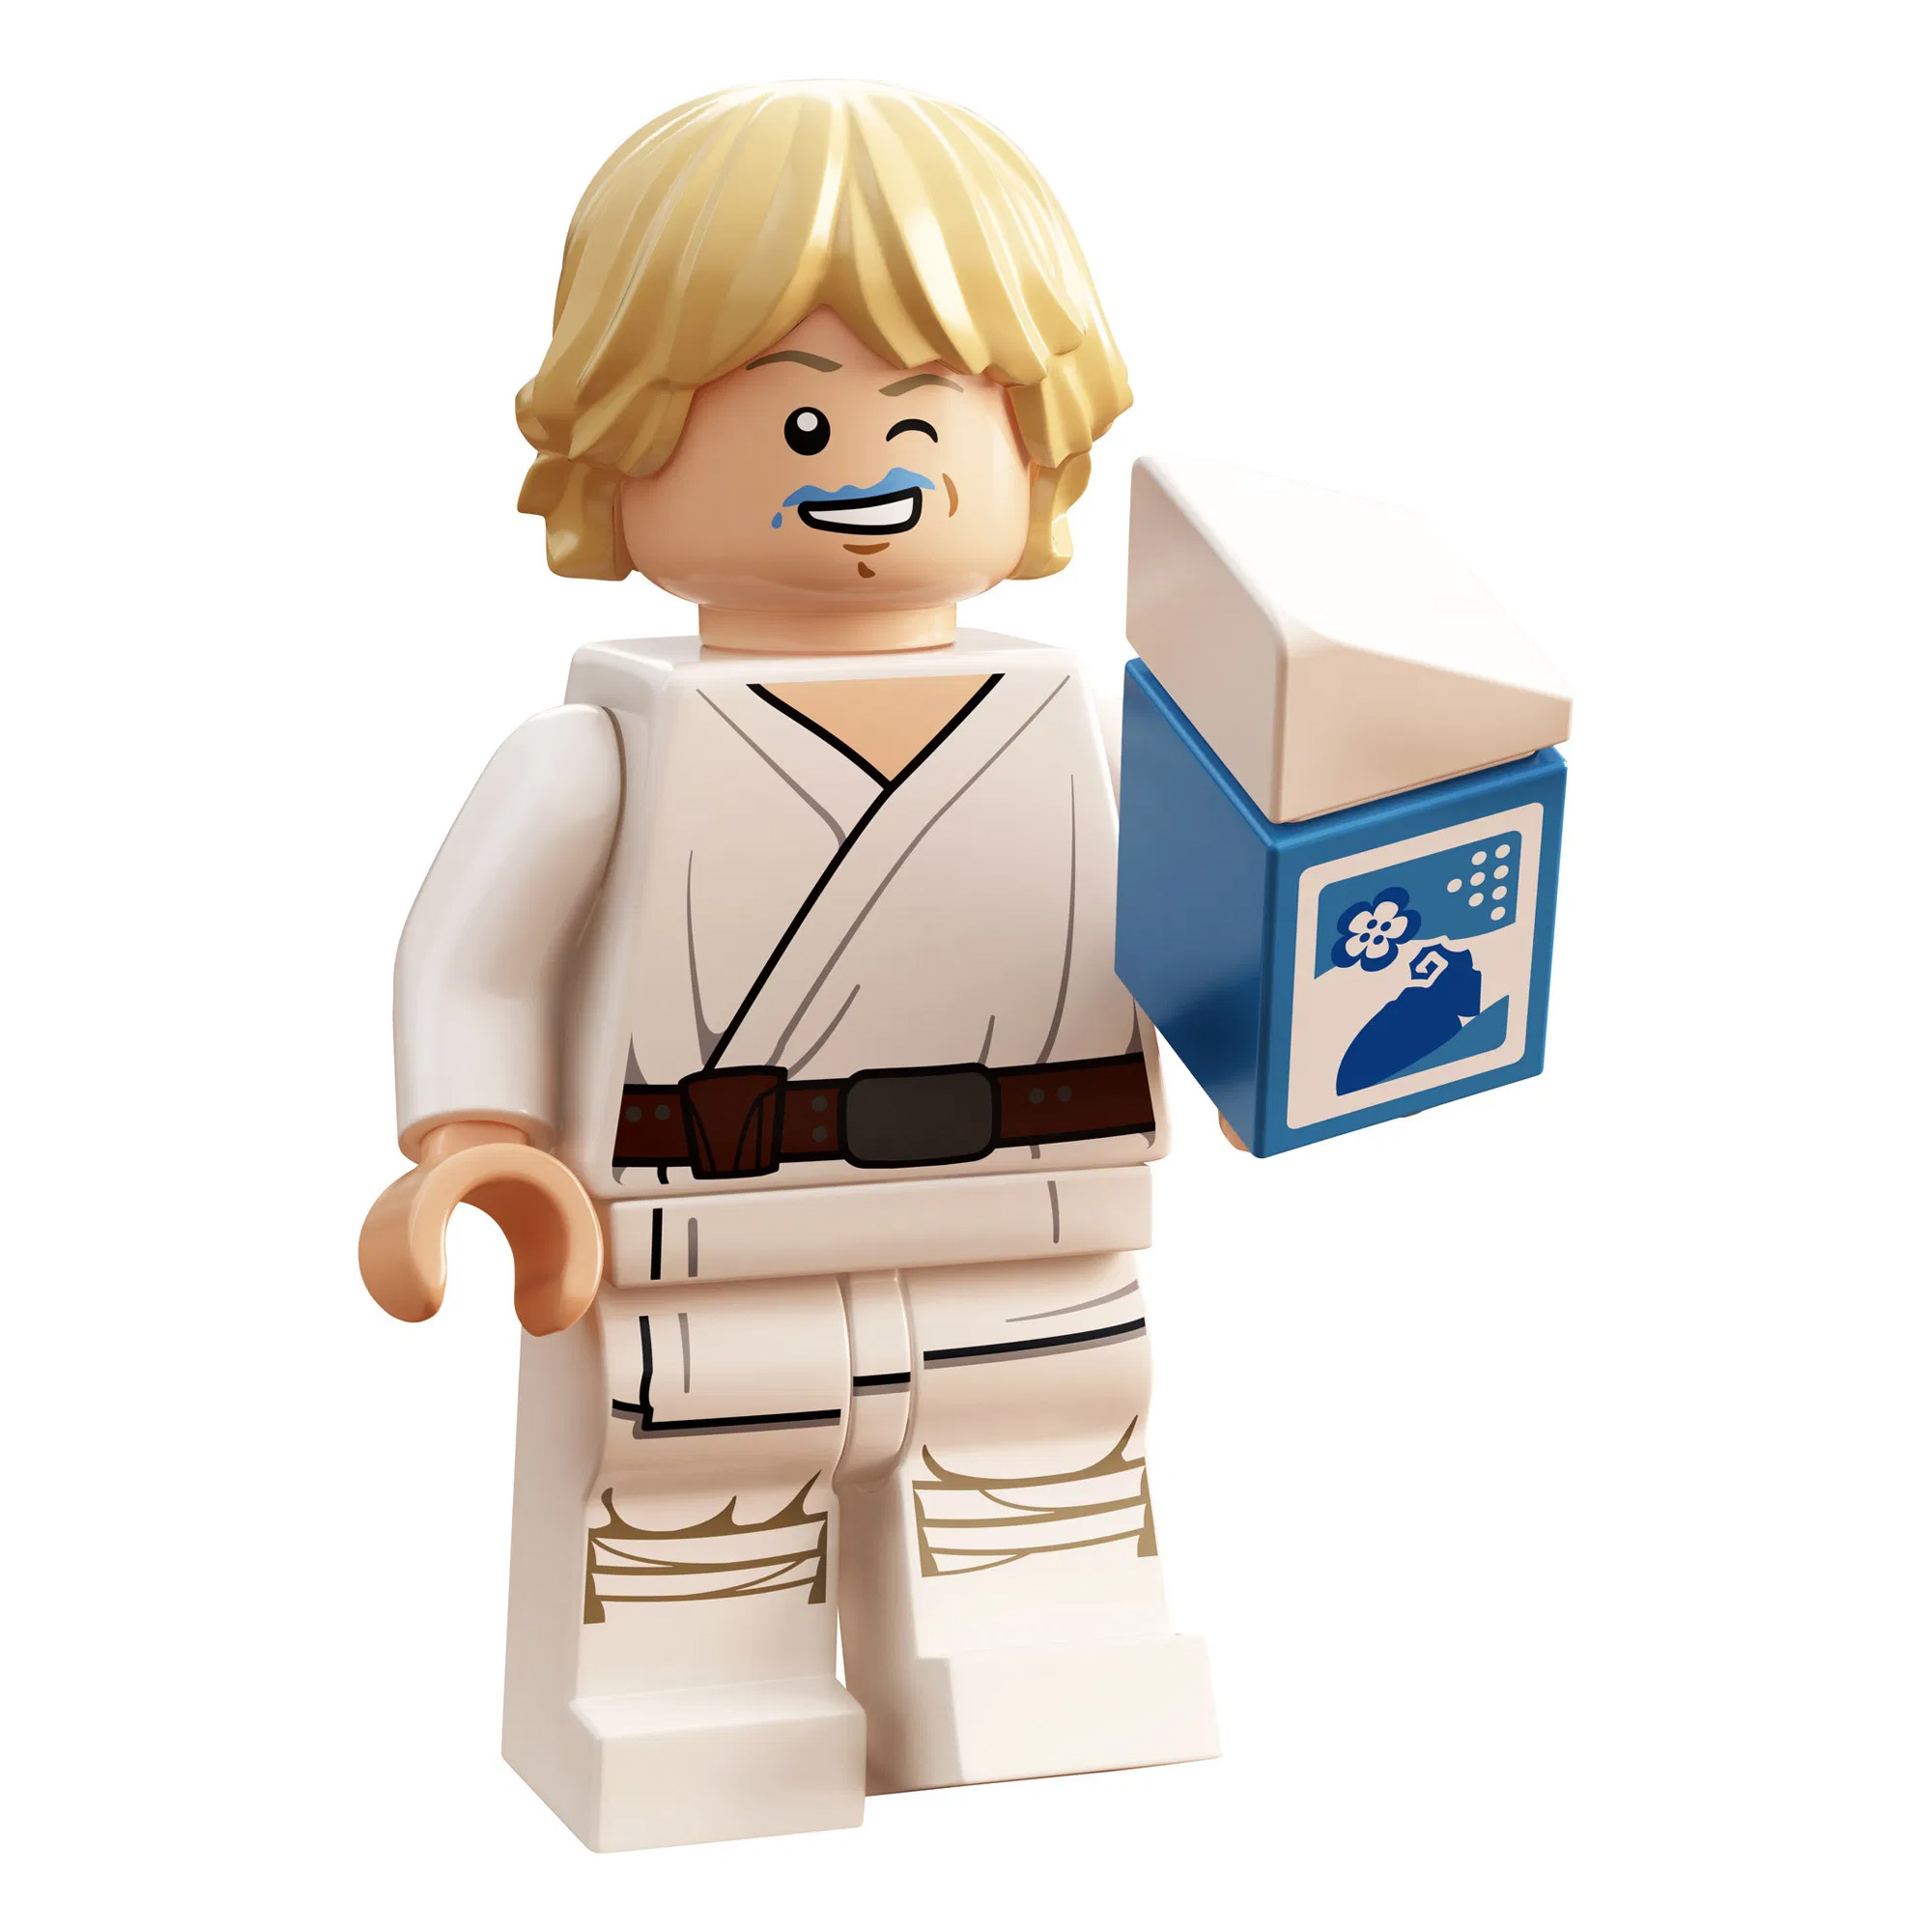 April 5th, LEGO Star Wars The Skywalker Saga Release Date Announced